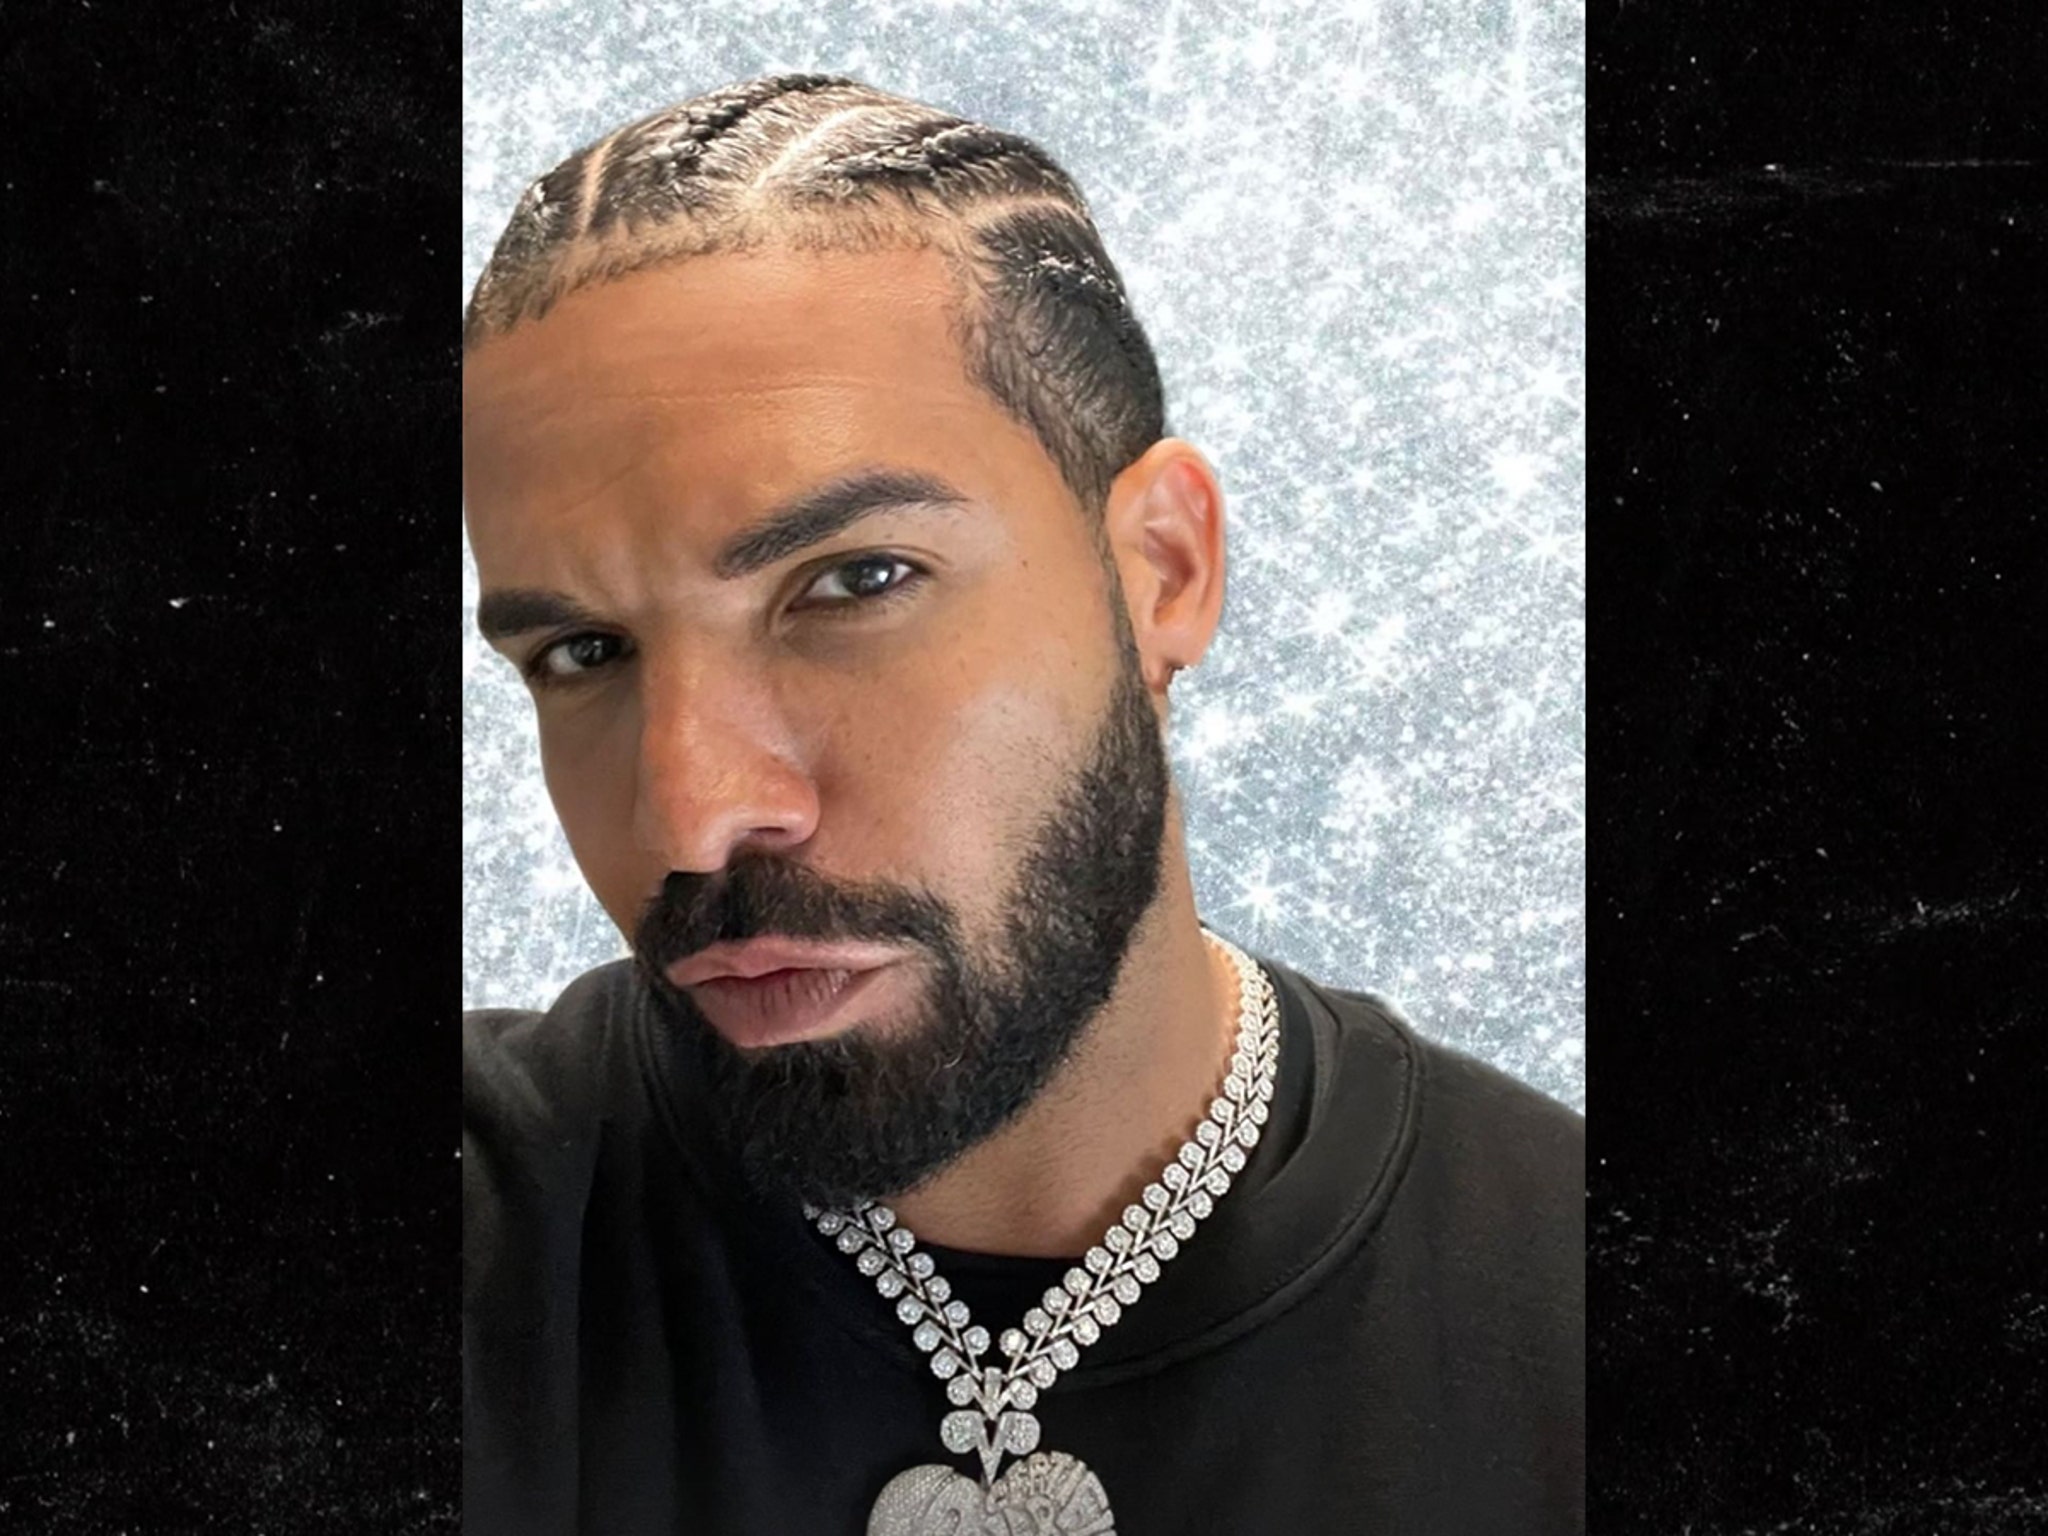 Drake debuts new hair look on social media